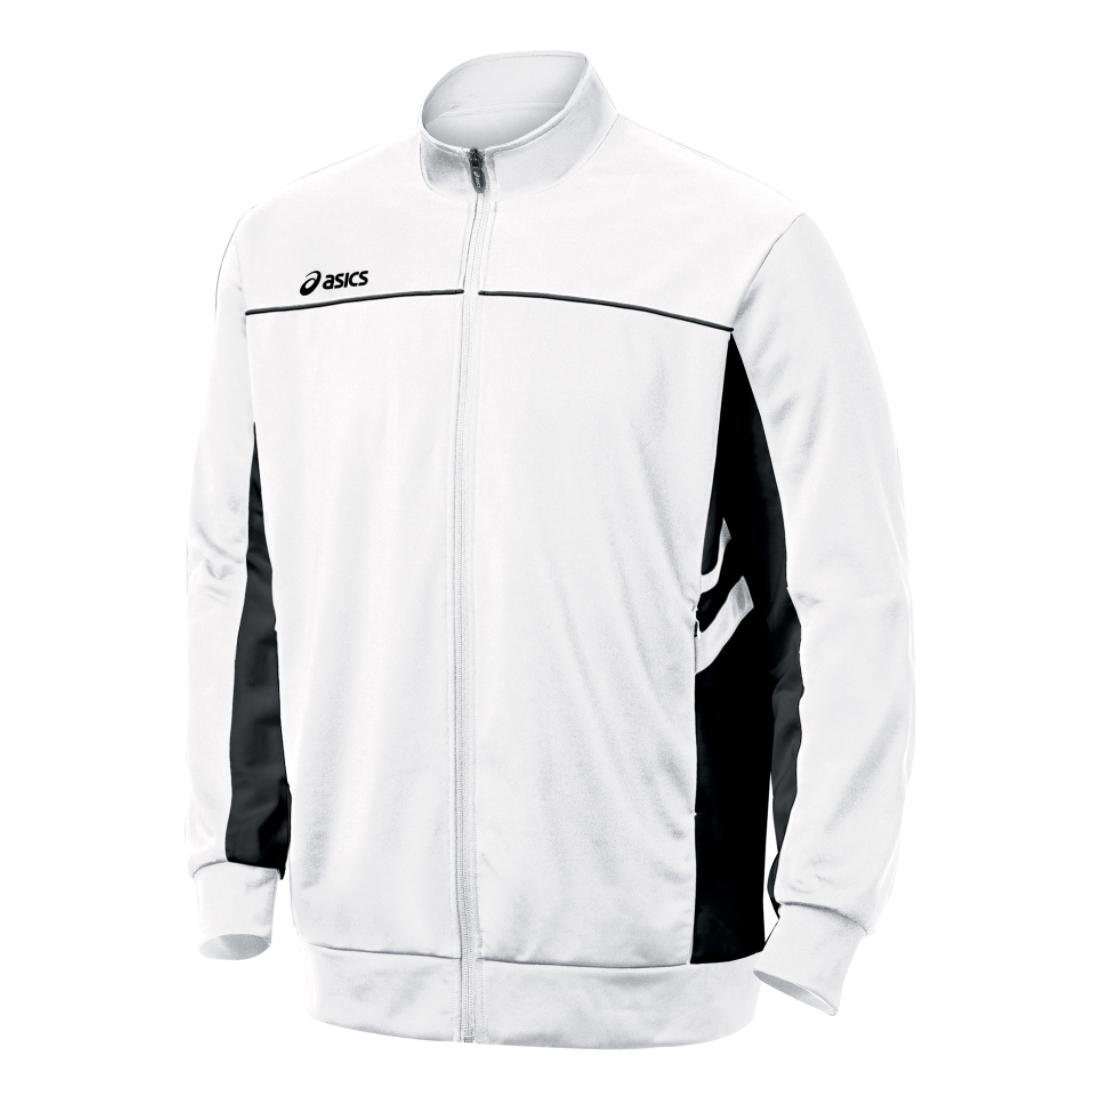 ASICS Men's Cabrillo Jacket, White/Black, Medium